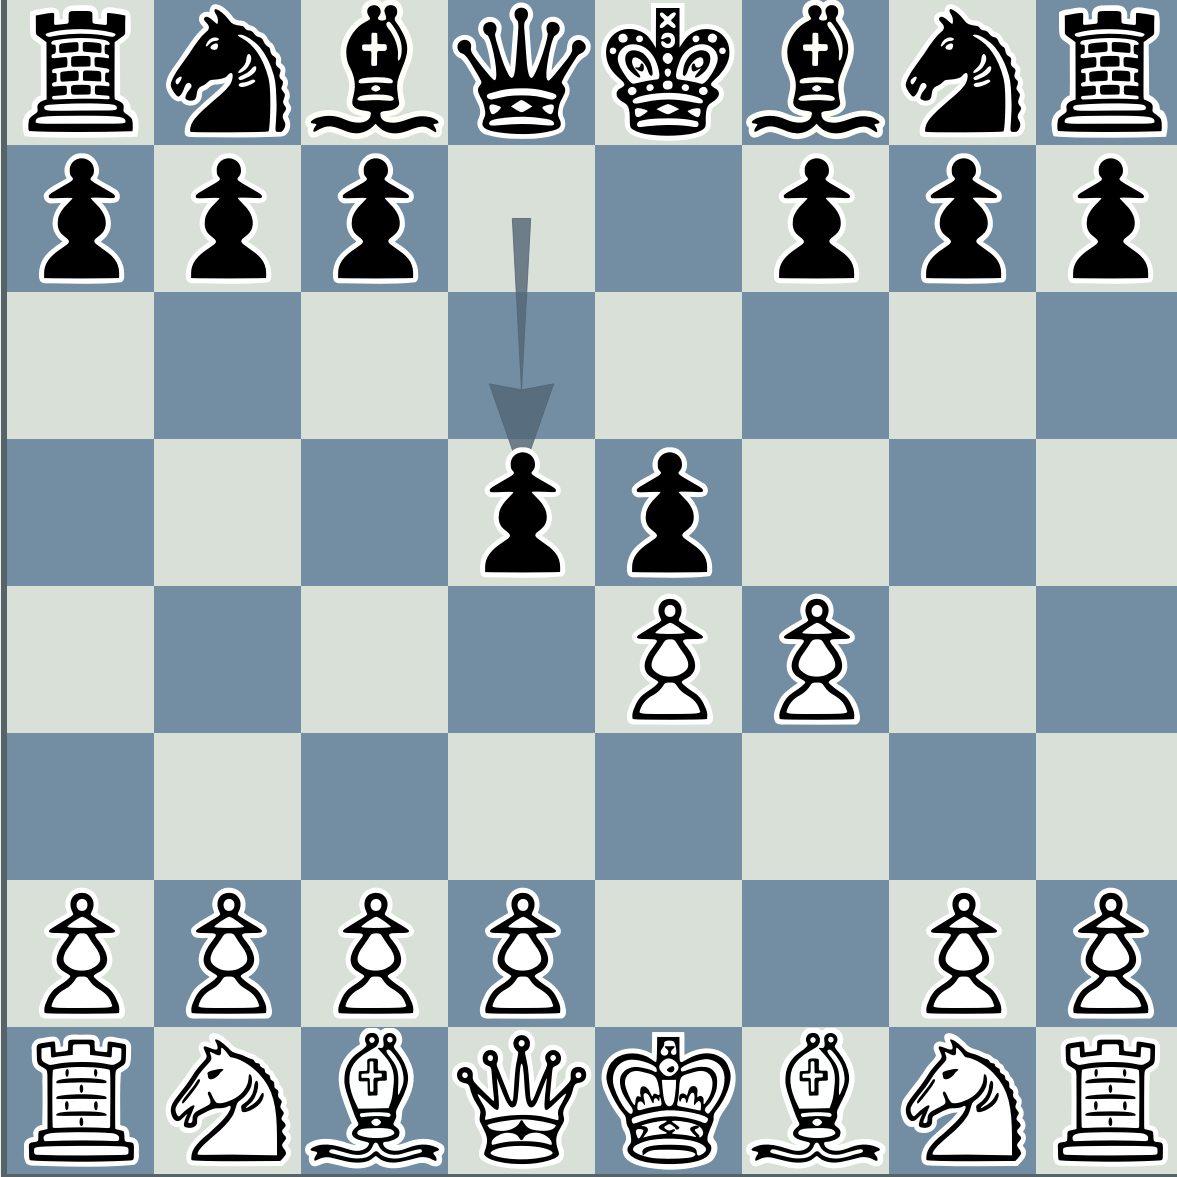 King's Gambit Accepted: Double Muzio Gambit: 1. e4 e5 2. f4 exf4 3